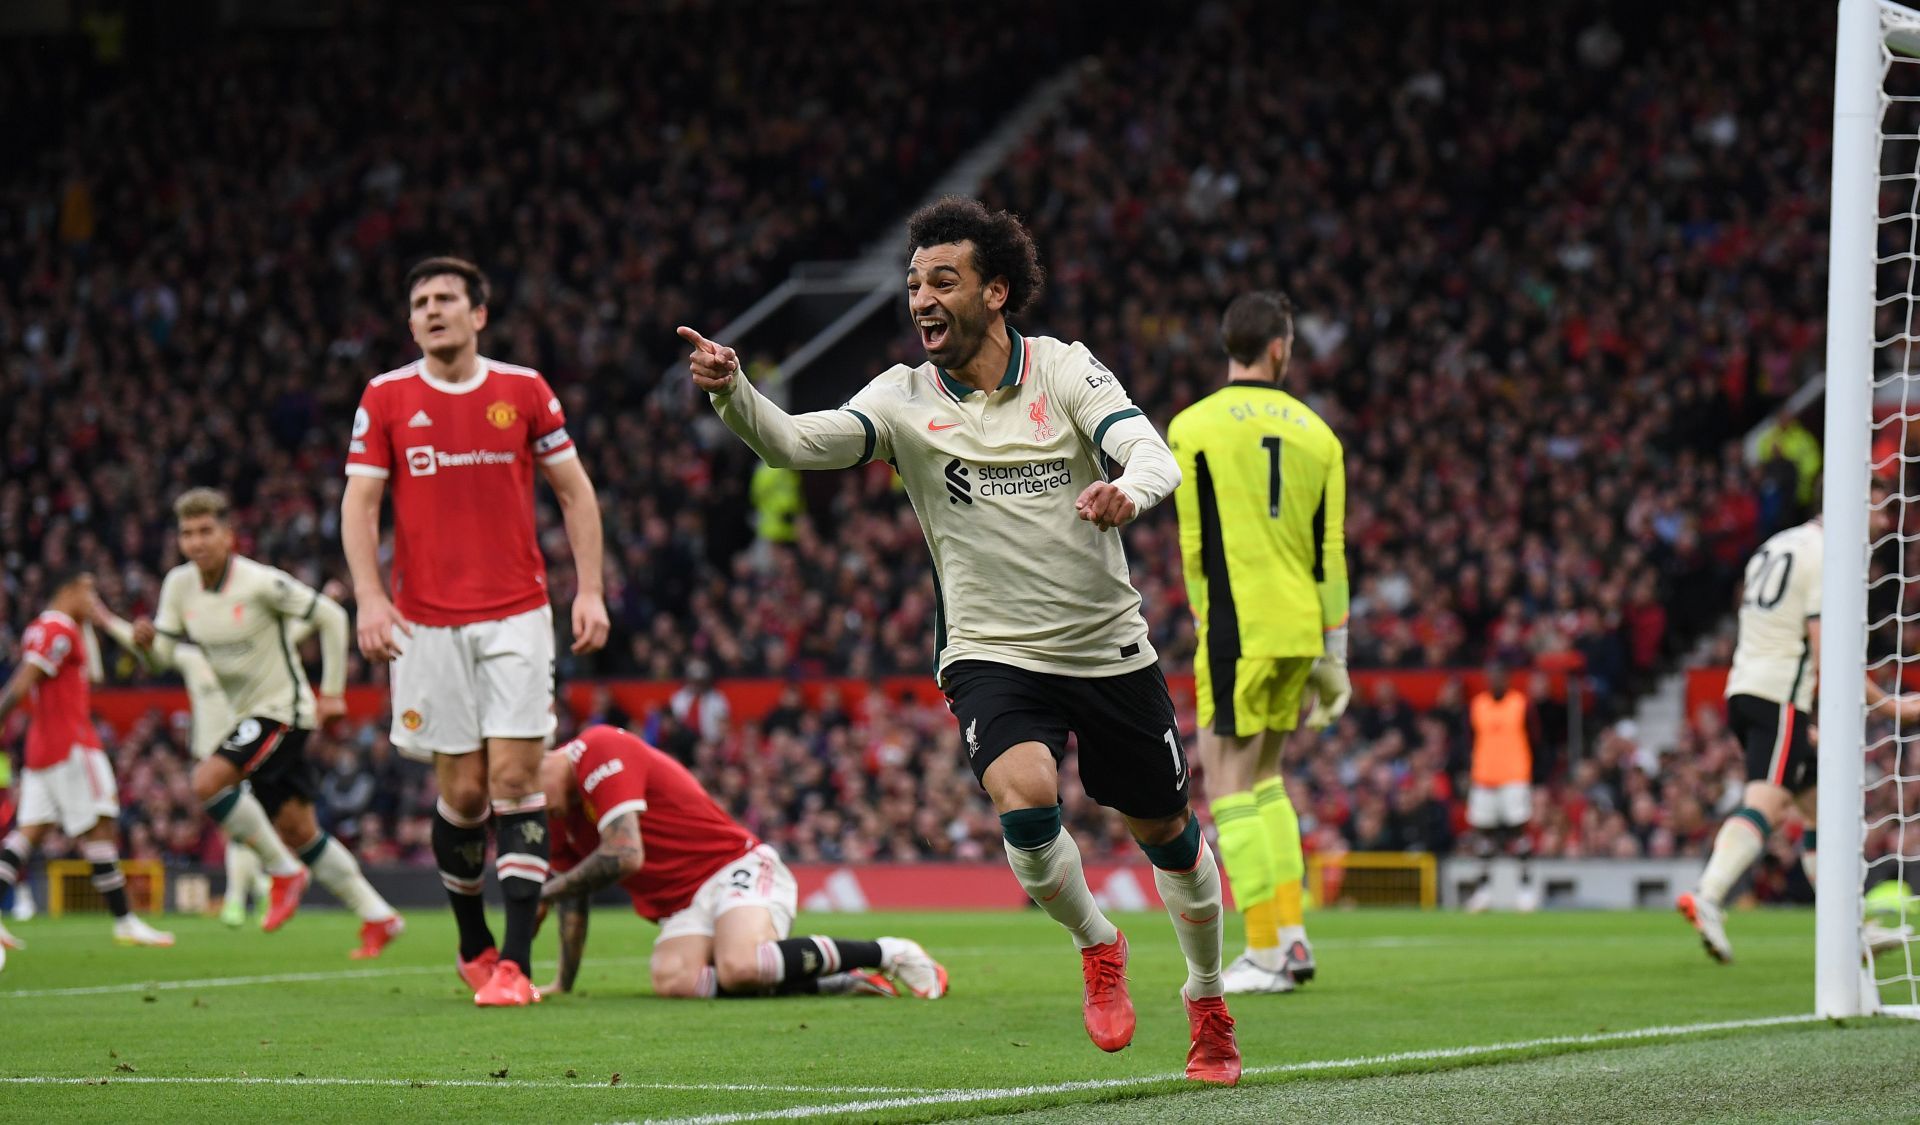 Liverpool star Mohamed Salah scores against Manchester United